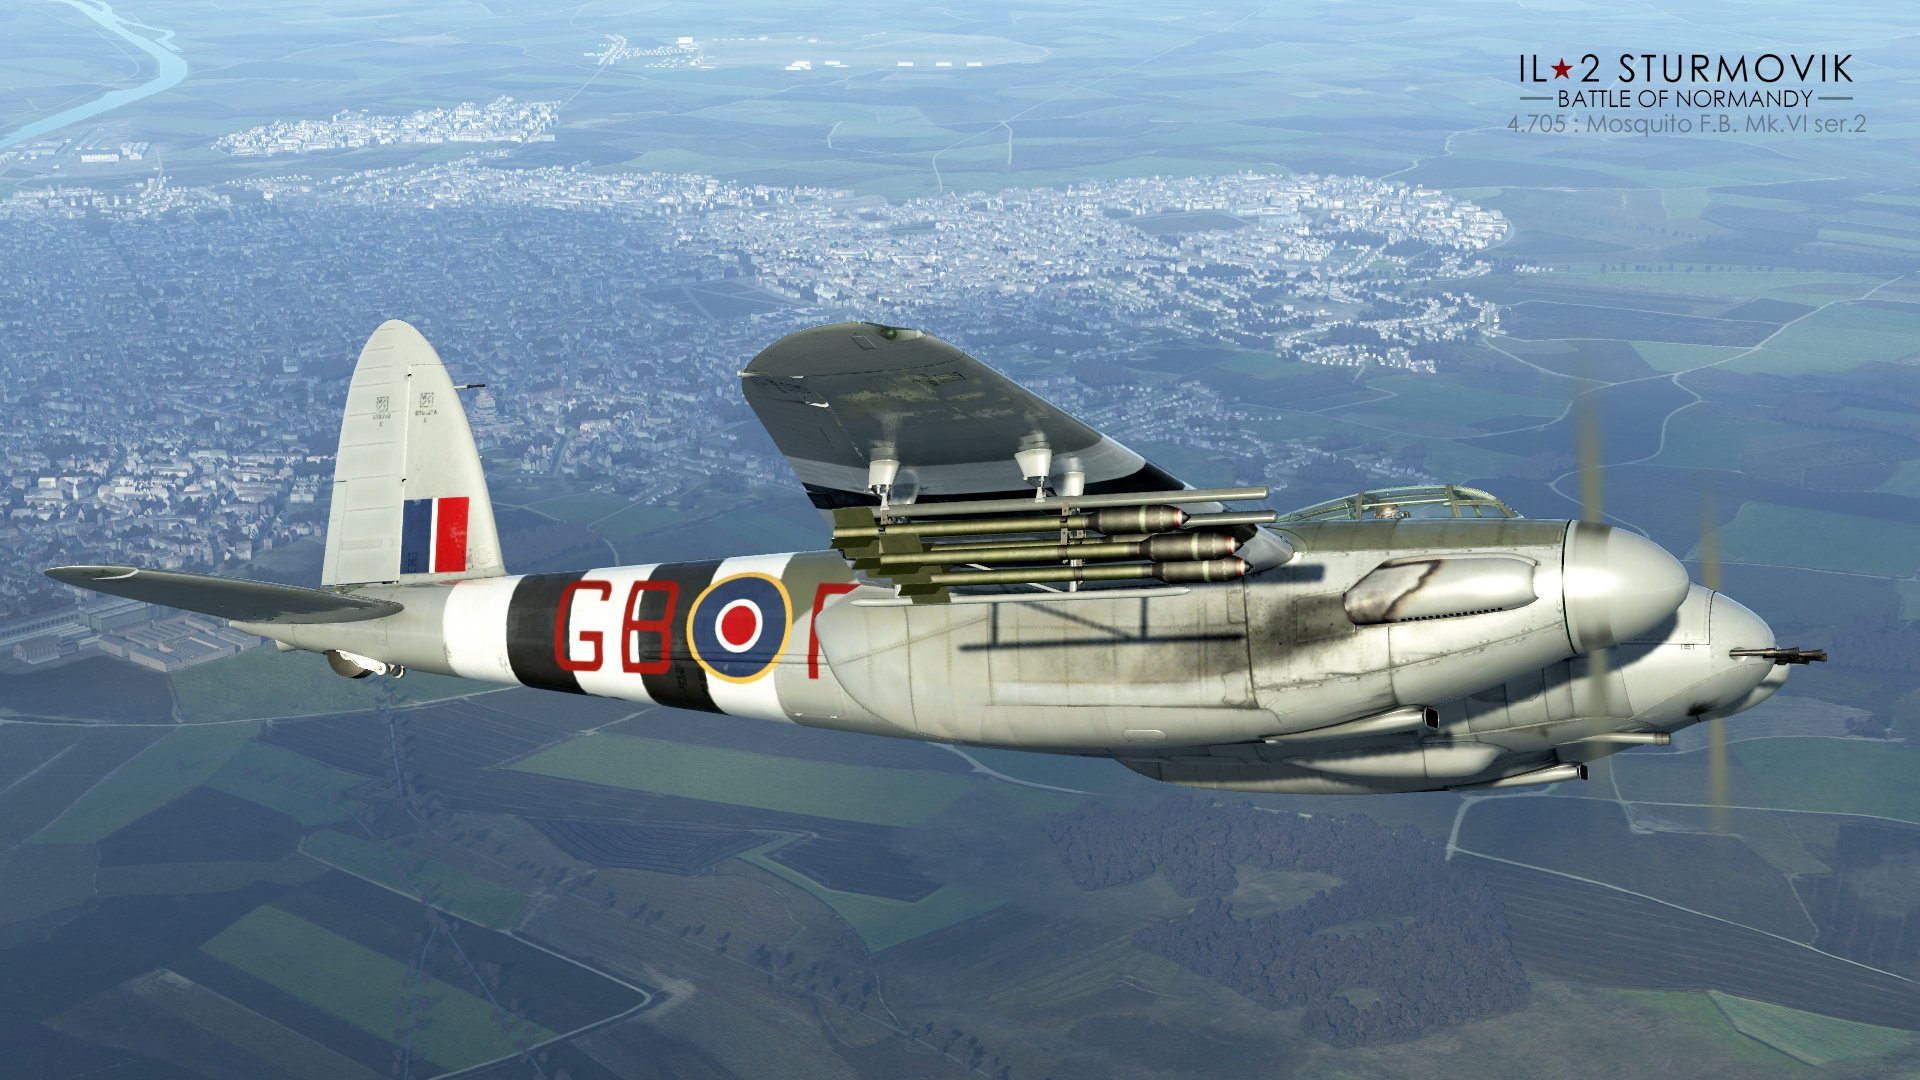 General 1920x1080 aircraft airplane De Havilland Mosquito video games simulation IL-2 Sturmovik (video game) screen shot British aircraft